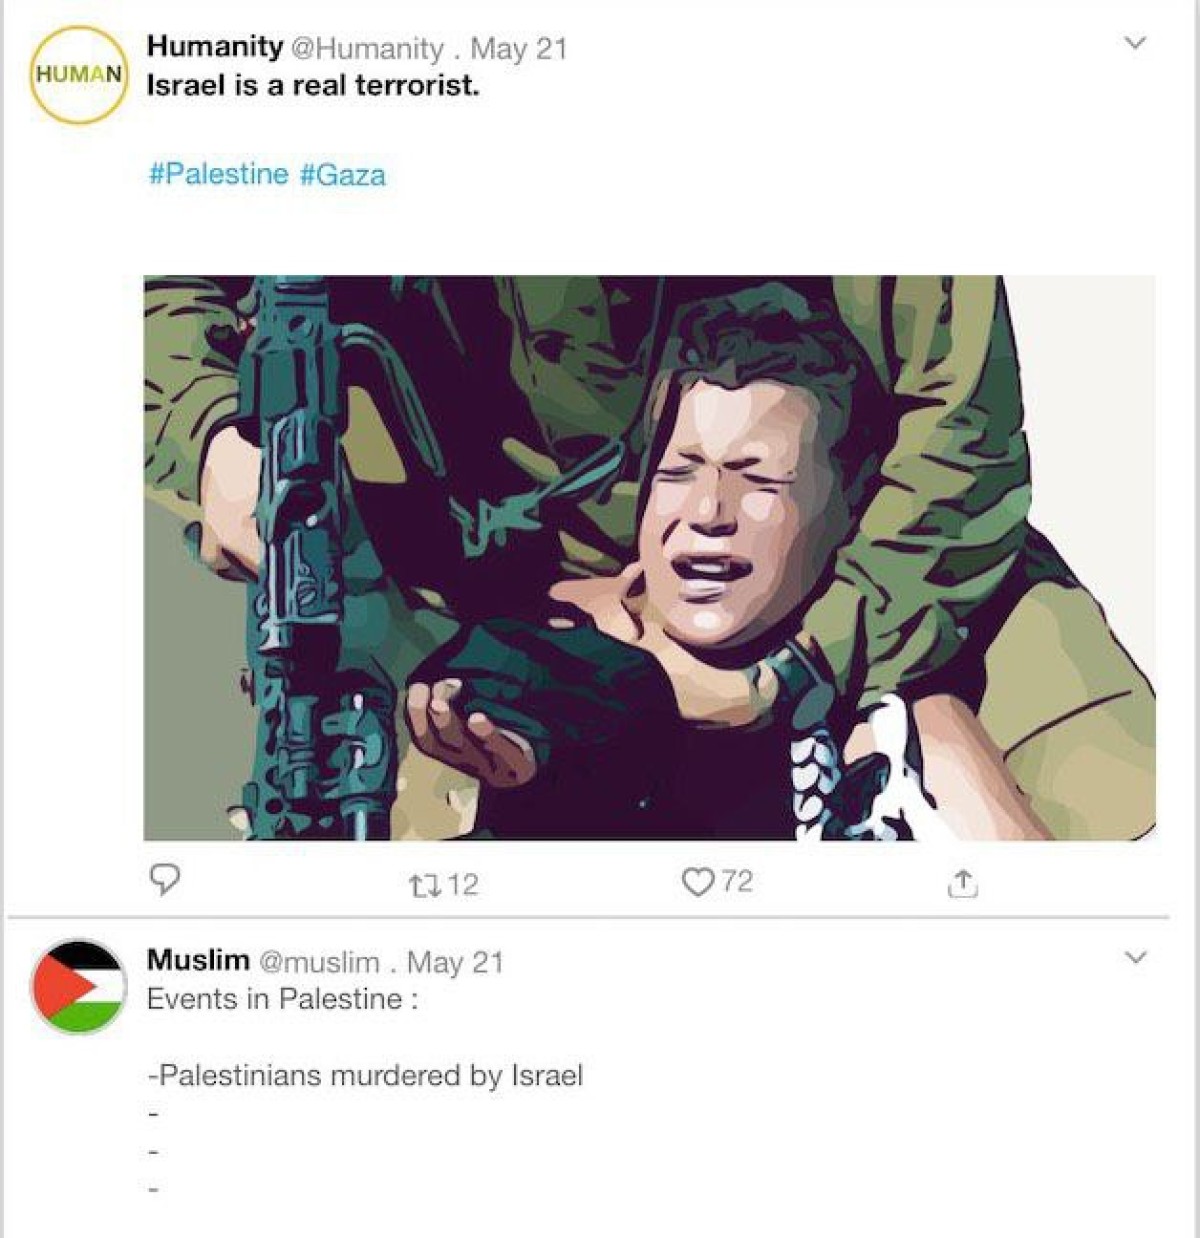 Israel is a real terrorist